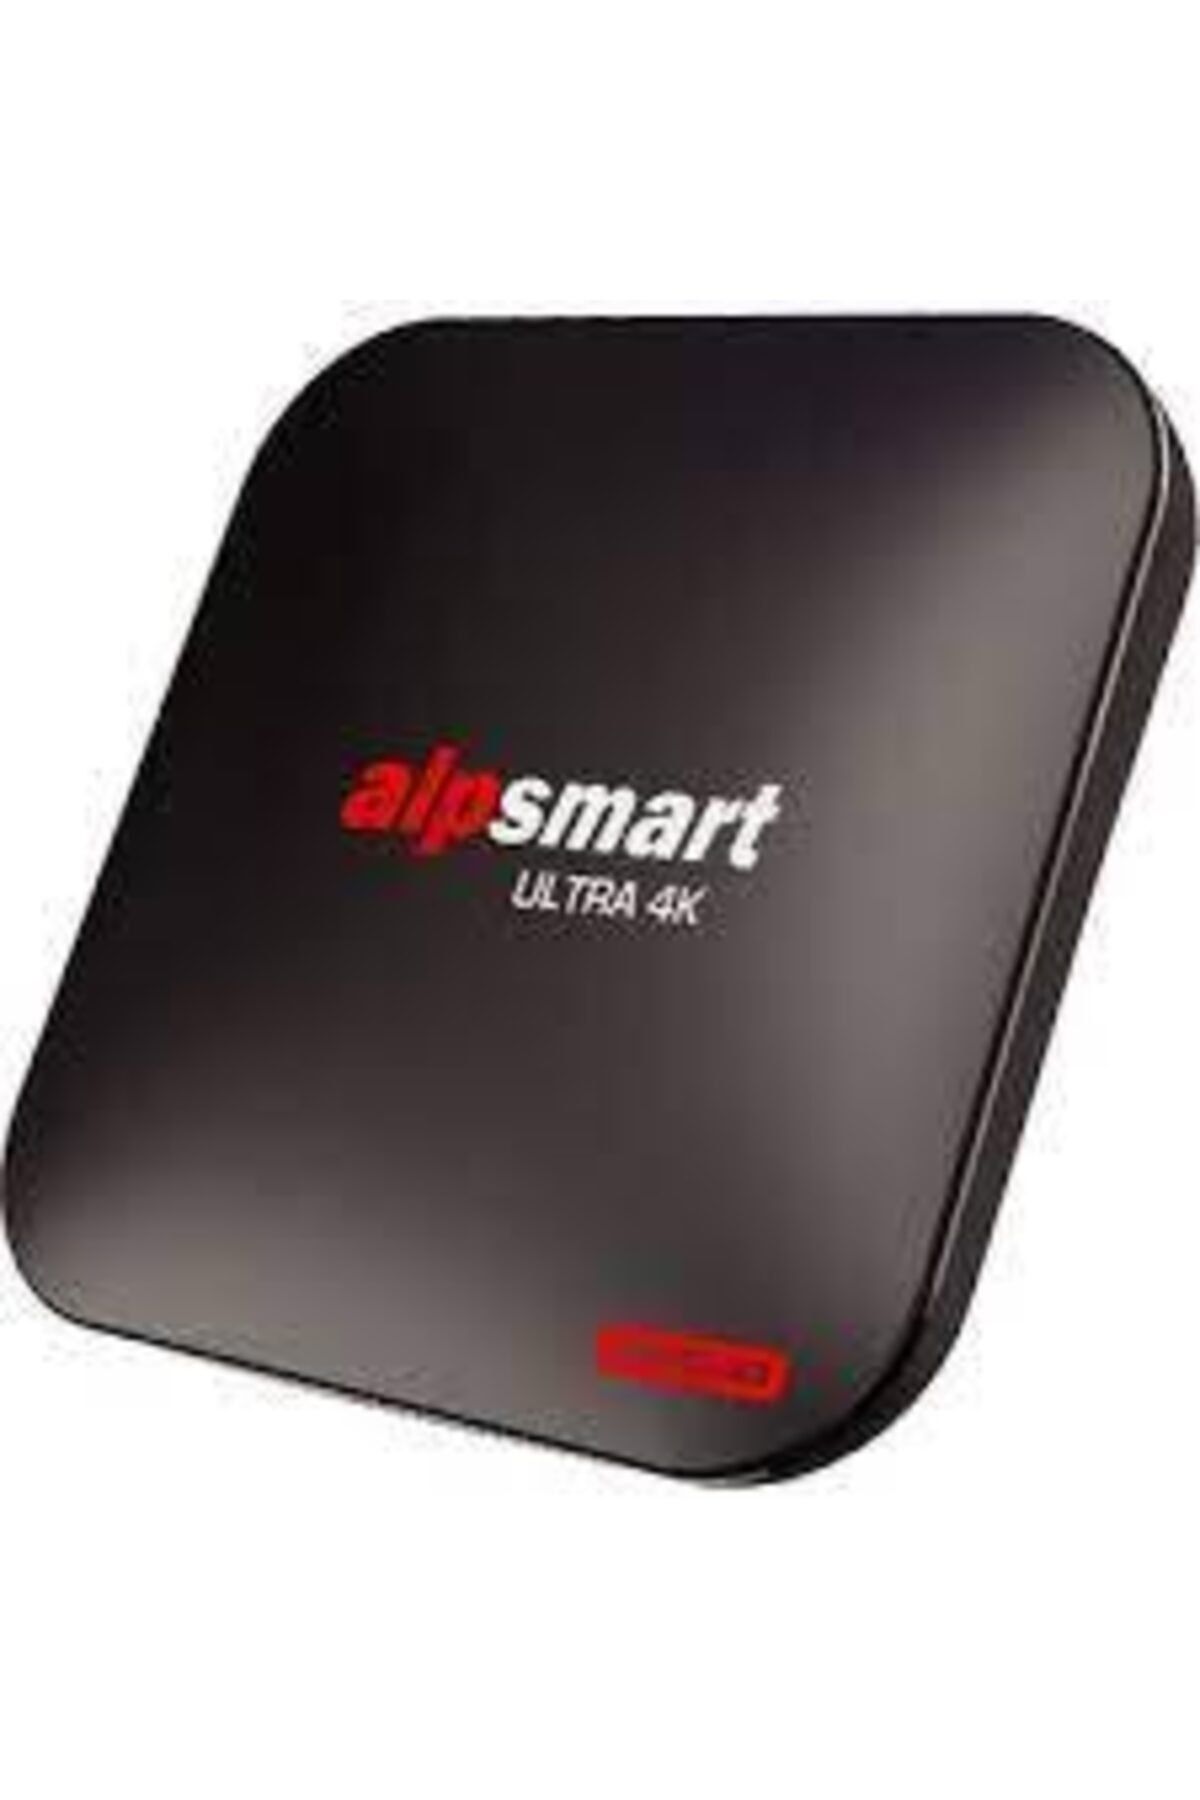 ALPSMART Android Tv Box - Android Smart Box - 4k Ultra Hd - Hediyeli